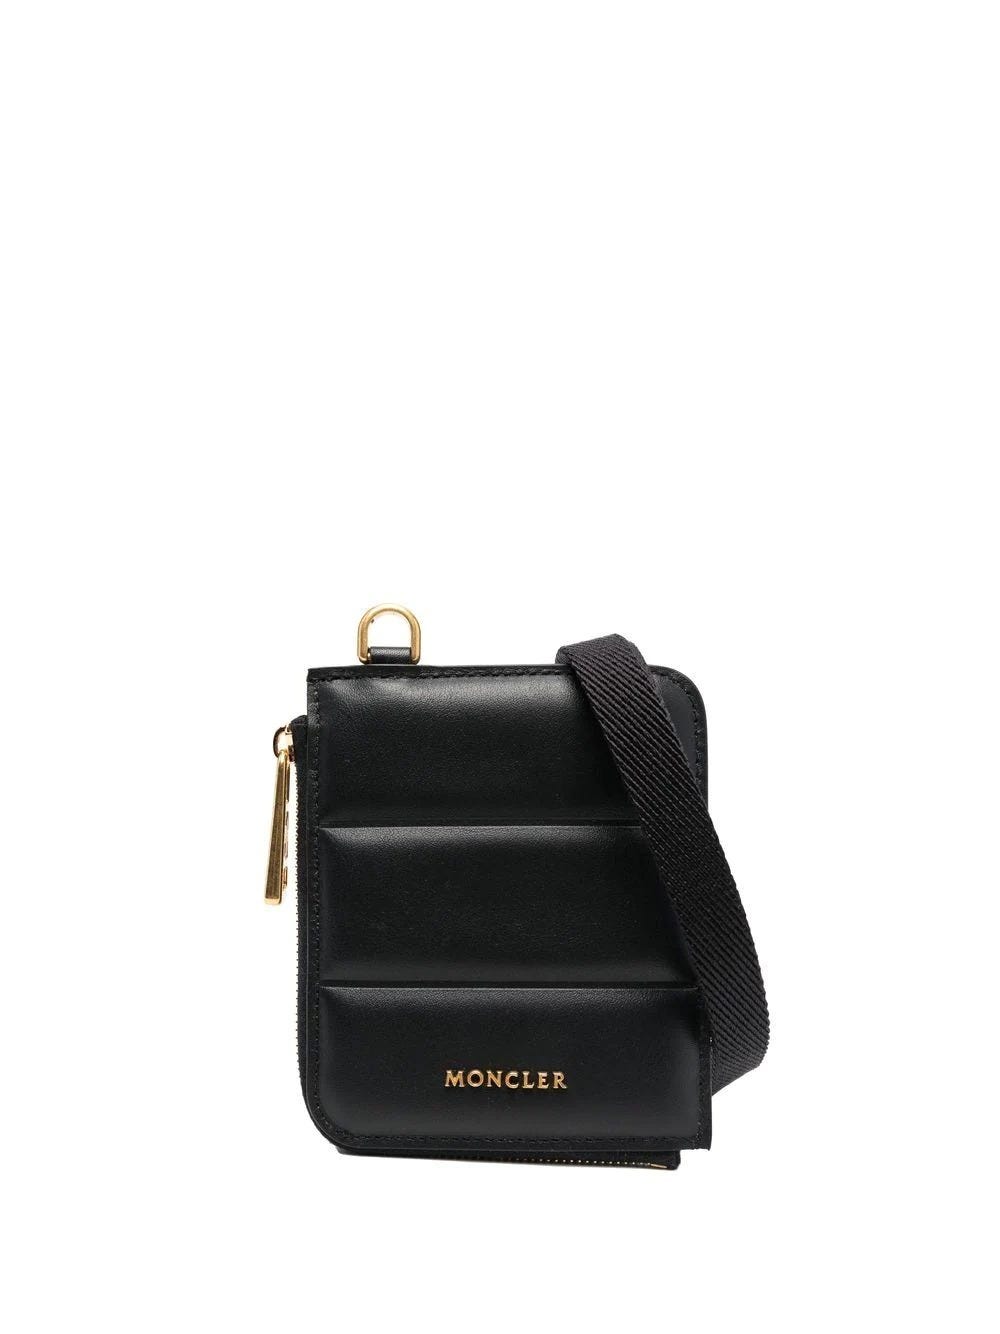 MONCLER Wallets | ModeSens